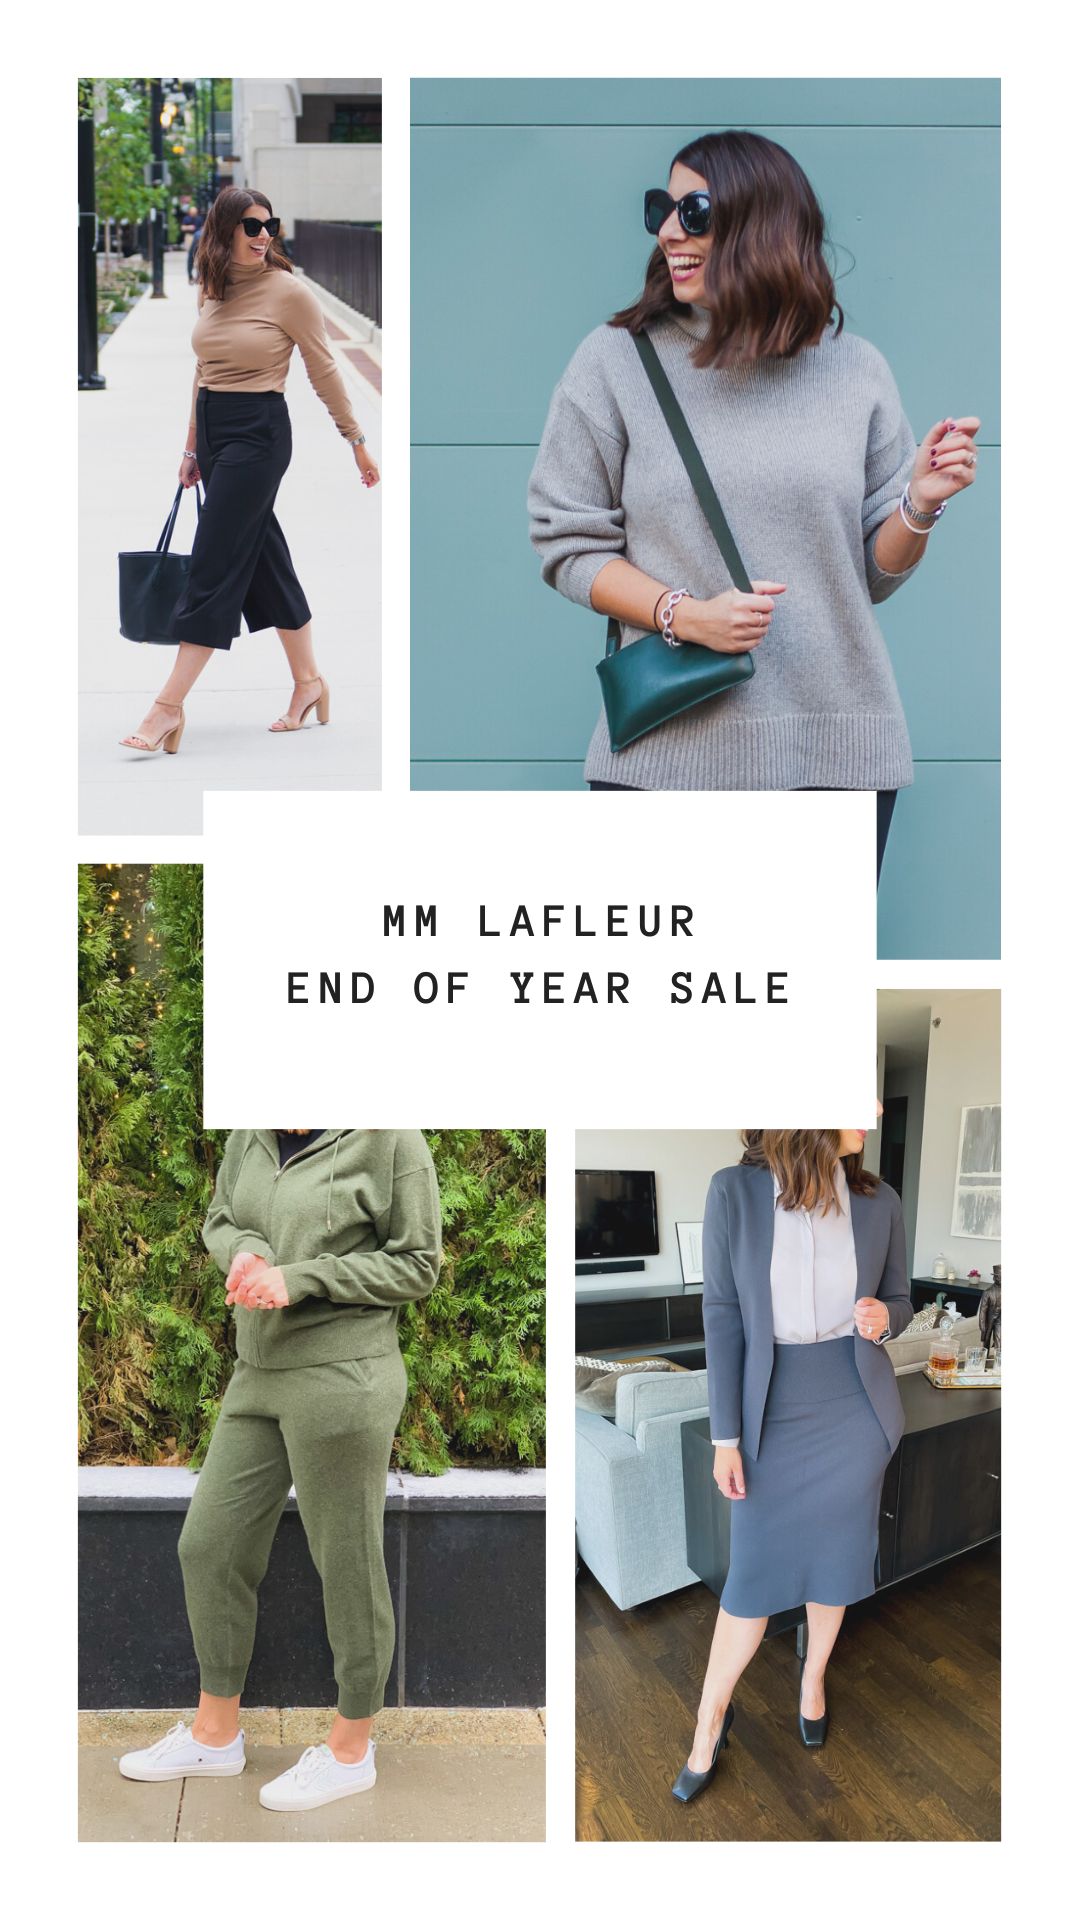 collage of MM LaFleur clothes on sale